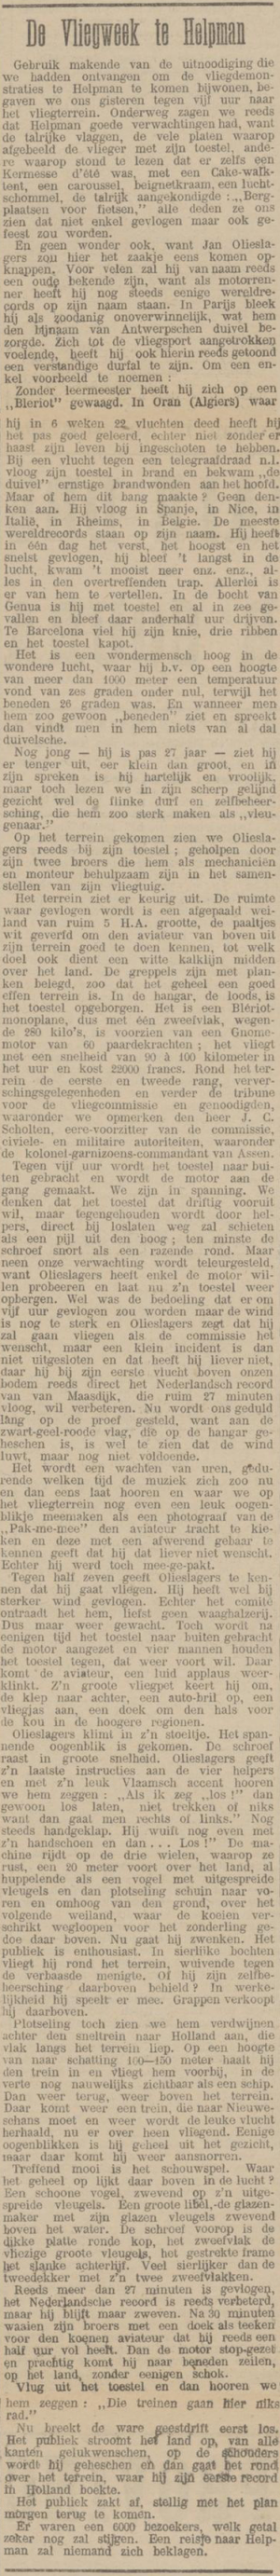 Provinciale Drentsche en Asser courant, 12 augustus 1910